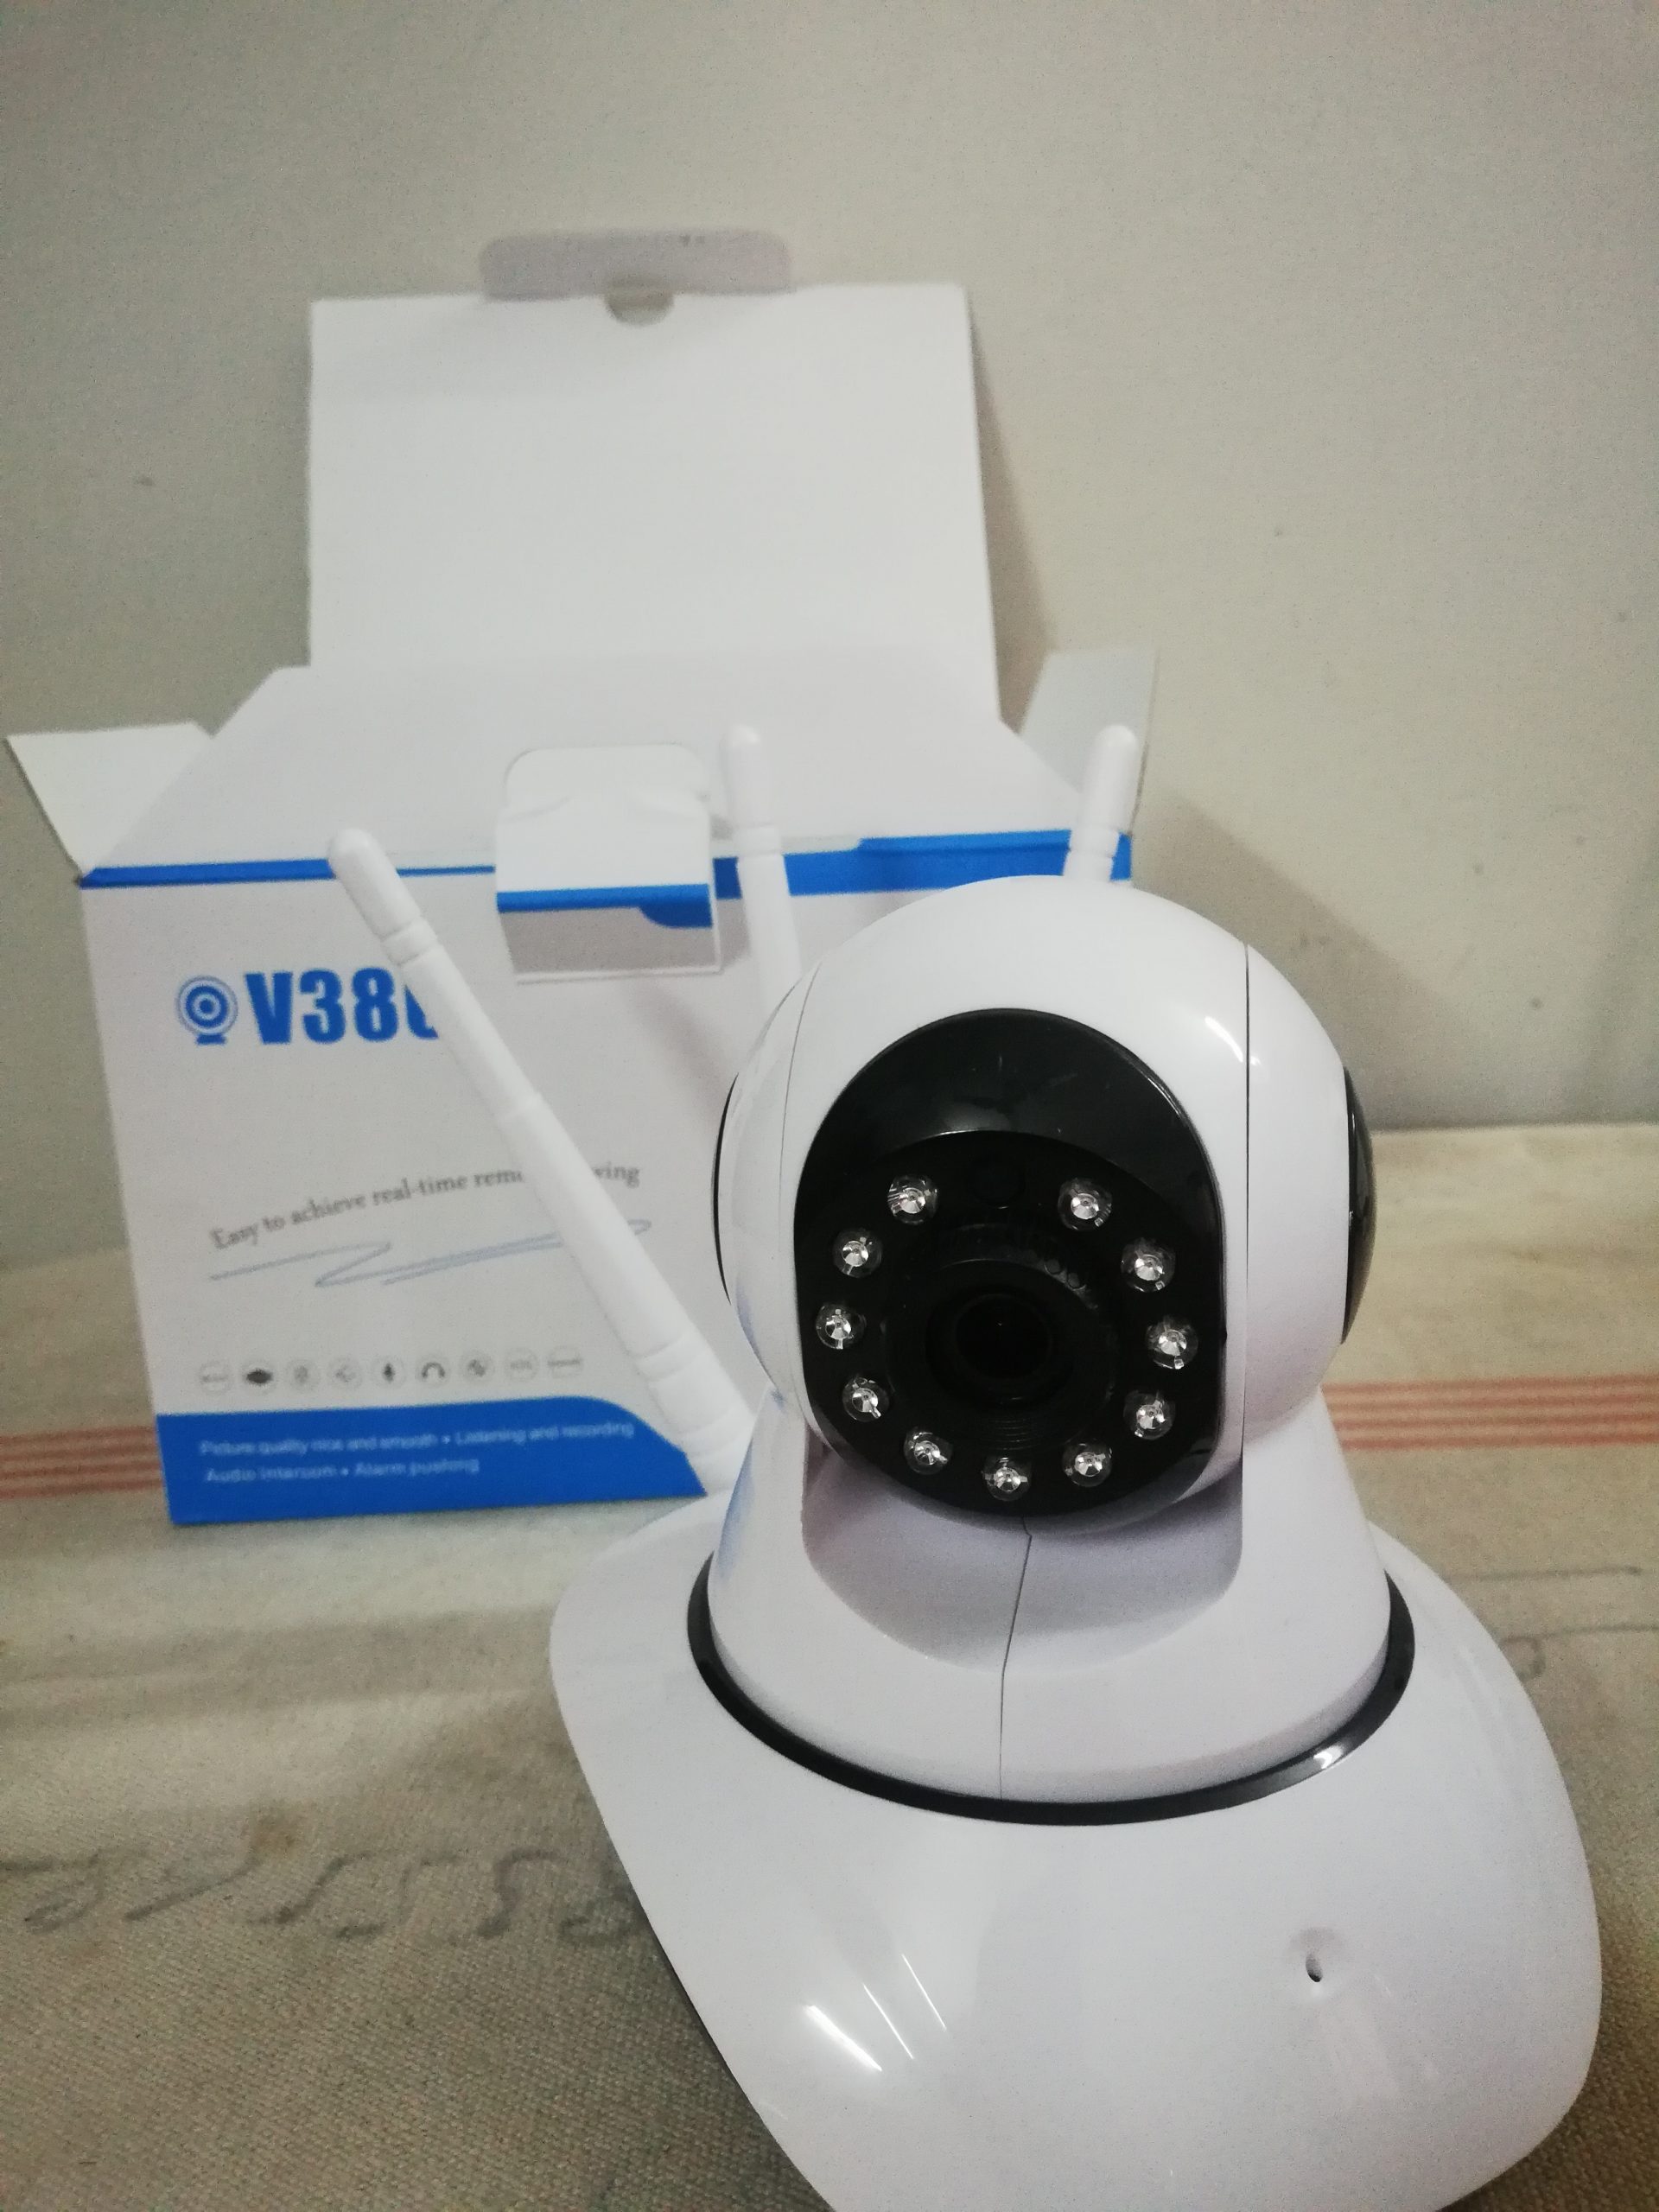 v380 wireless camera